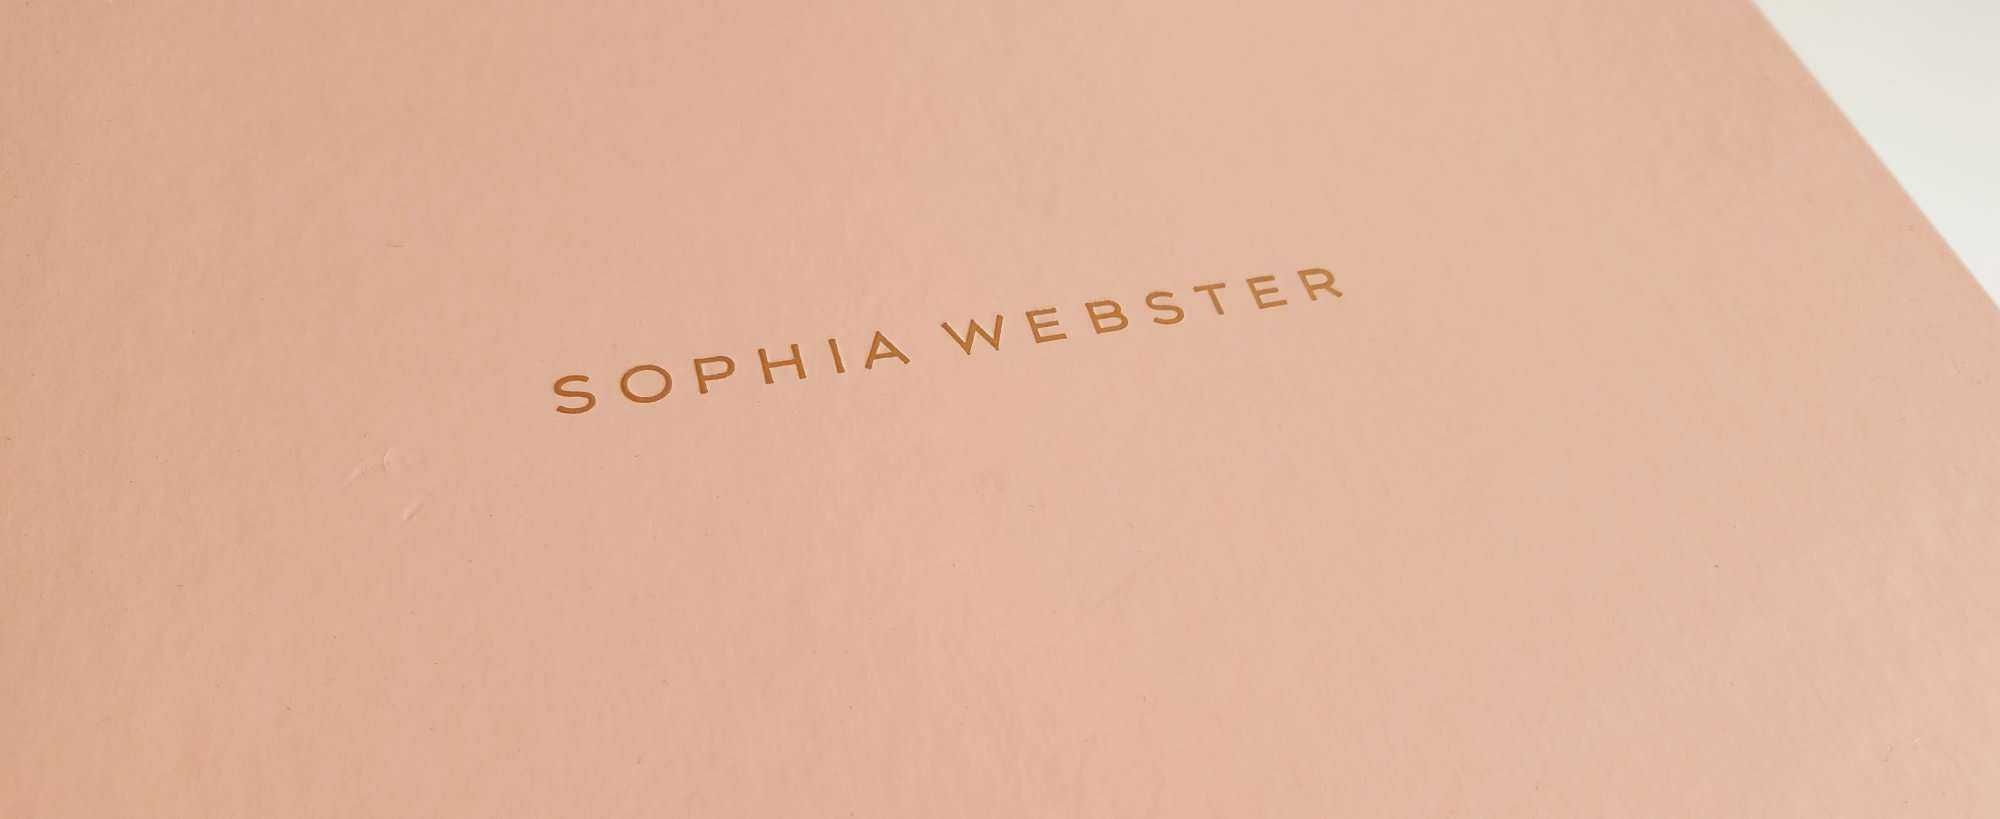 Pudełko Sophia Webster